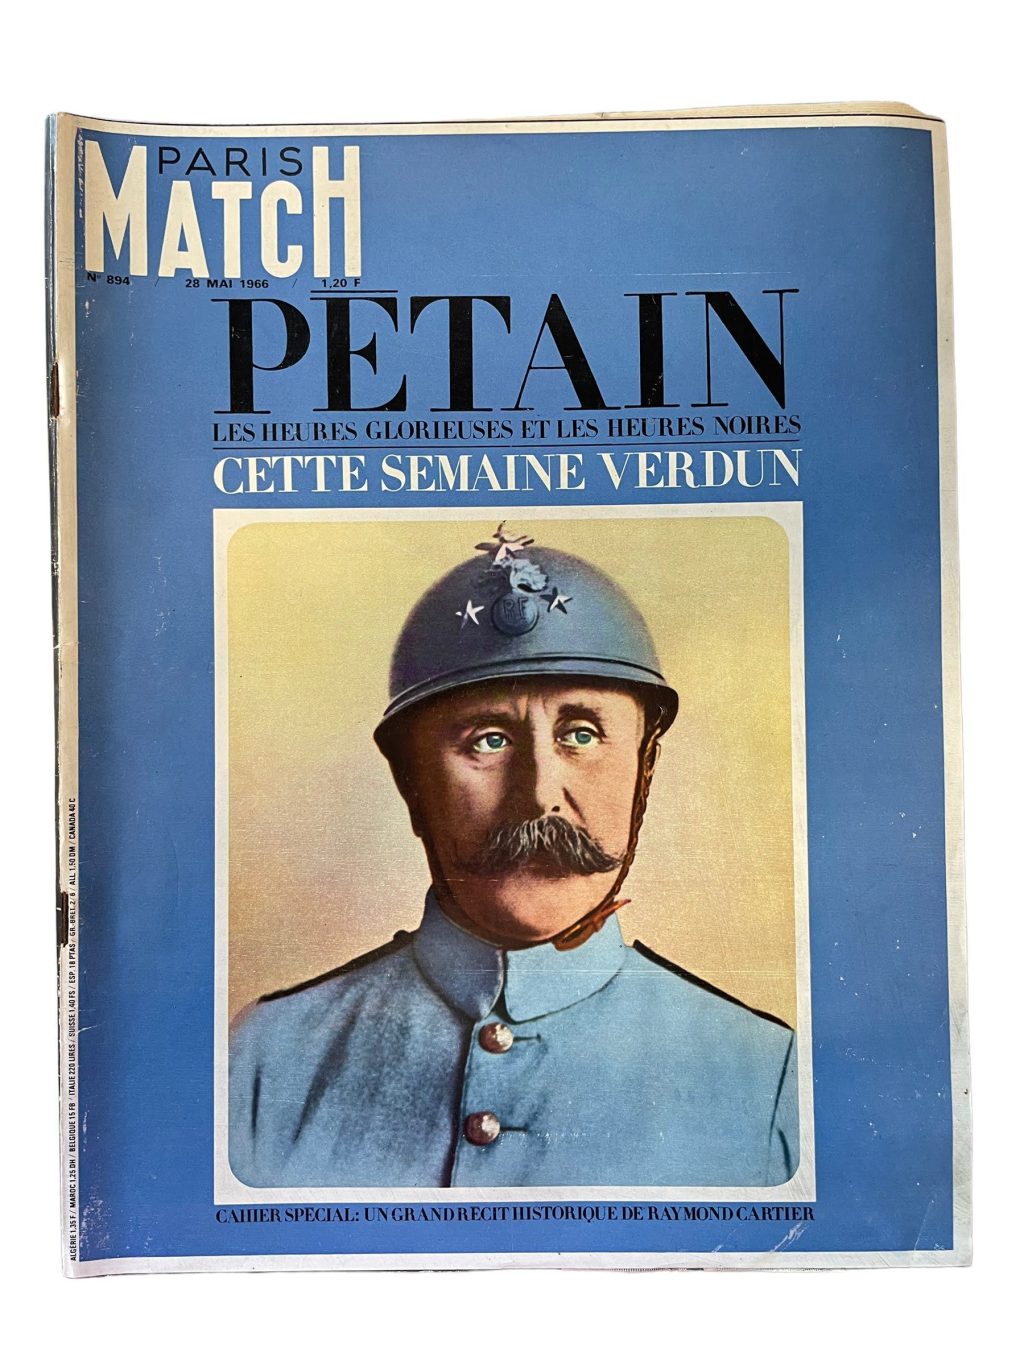 Vintage French Paris Match Le Magazine Journal Number 894 – 28/5/1966 Memorabilia Collector 1966 / EVE